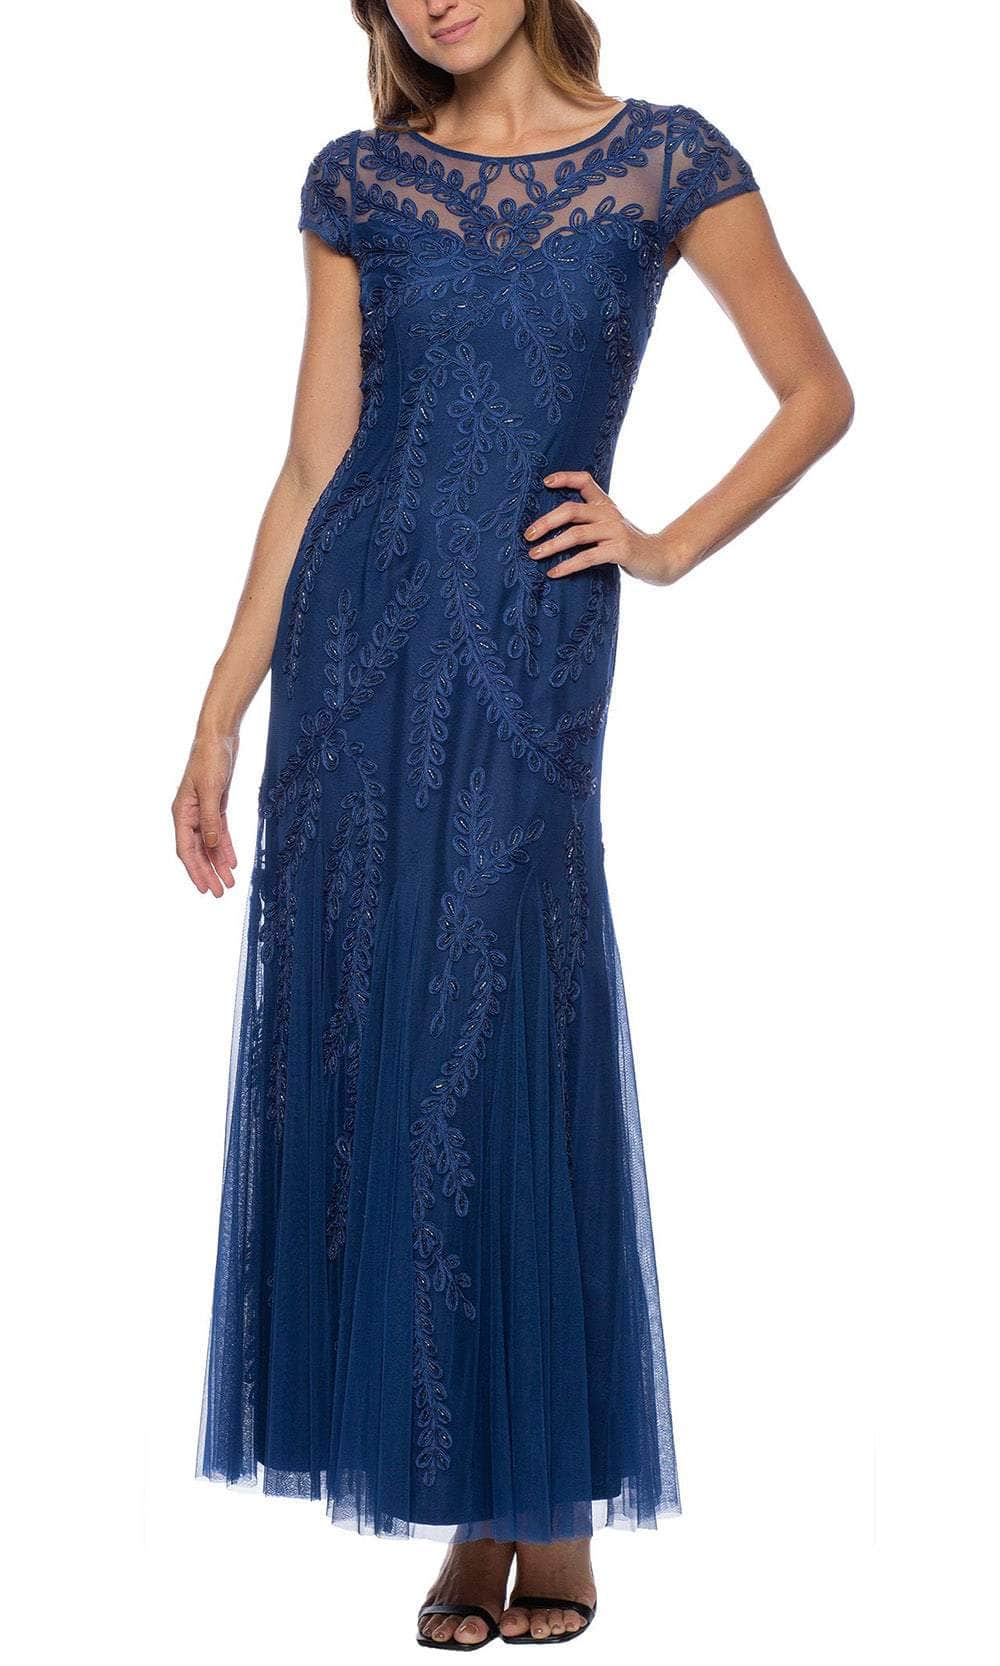 Image of Marina 267853 - Cap Sleeve Embellished Evening Gown